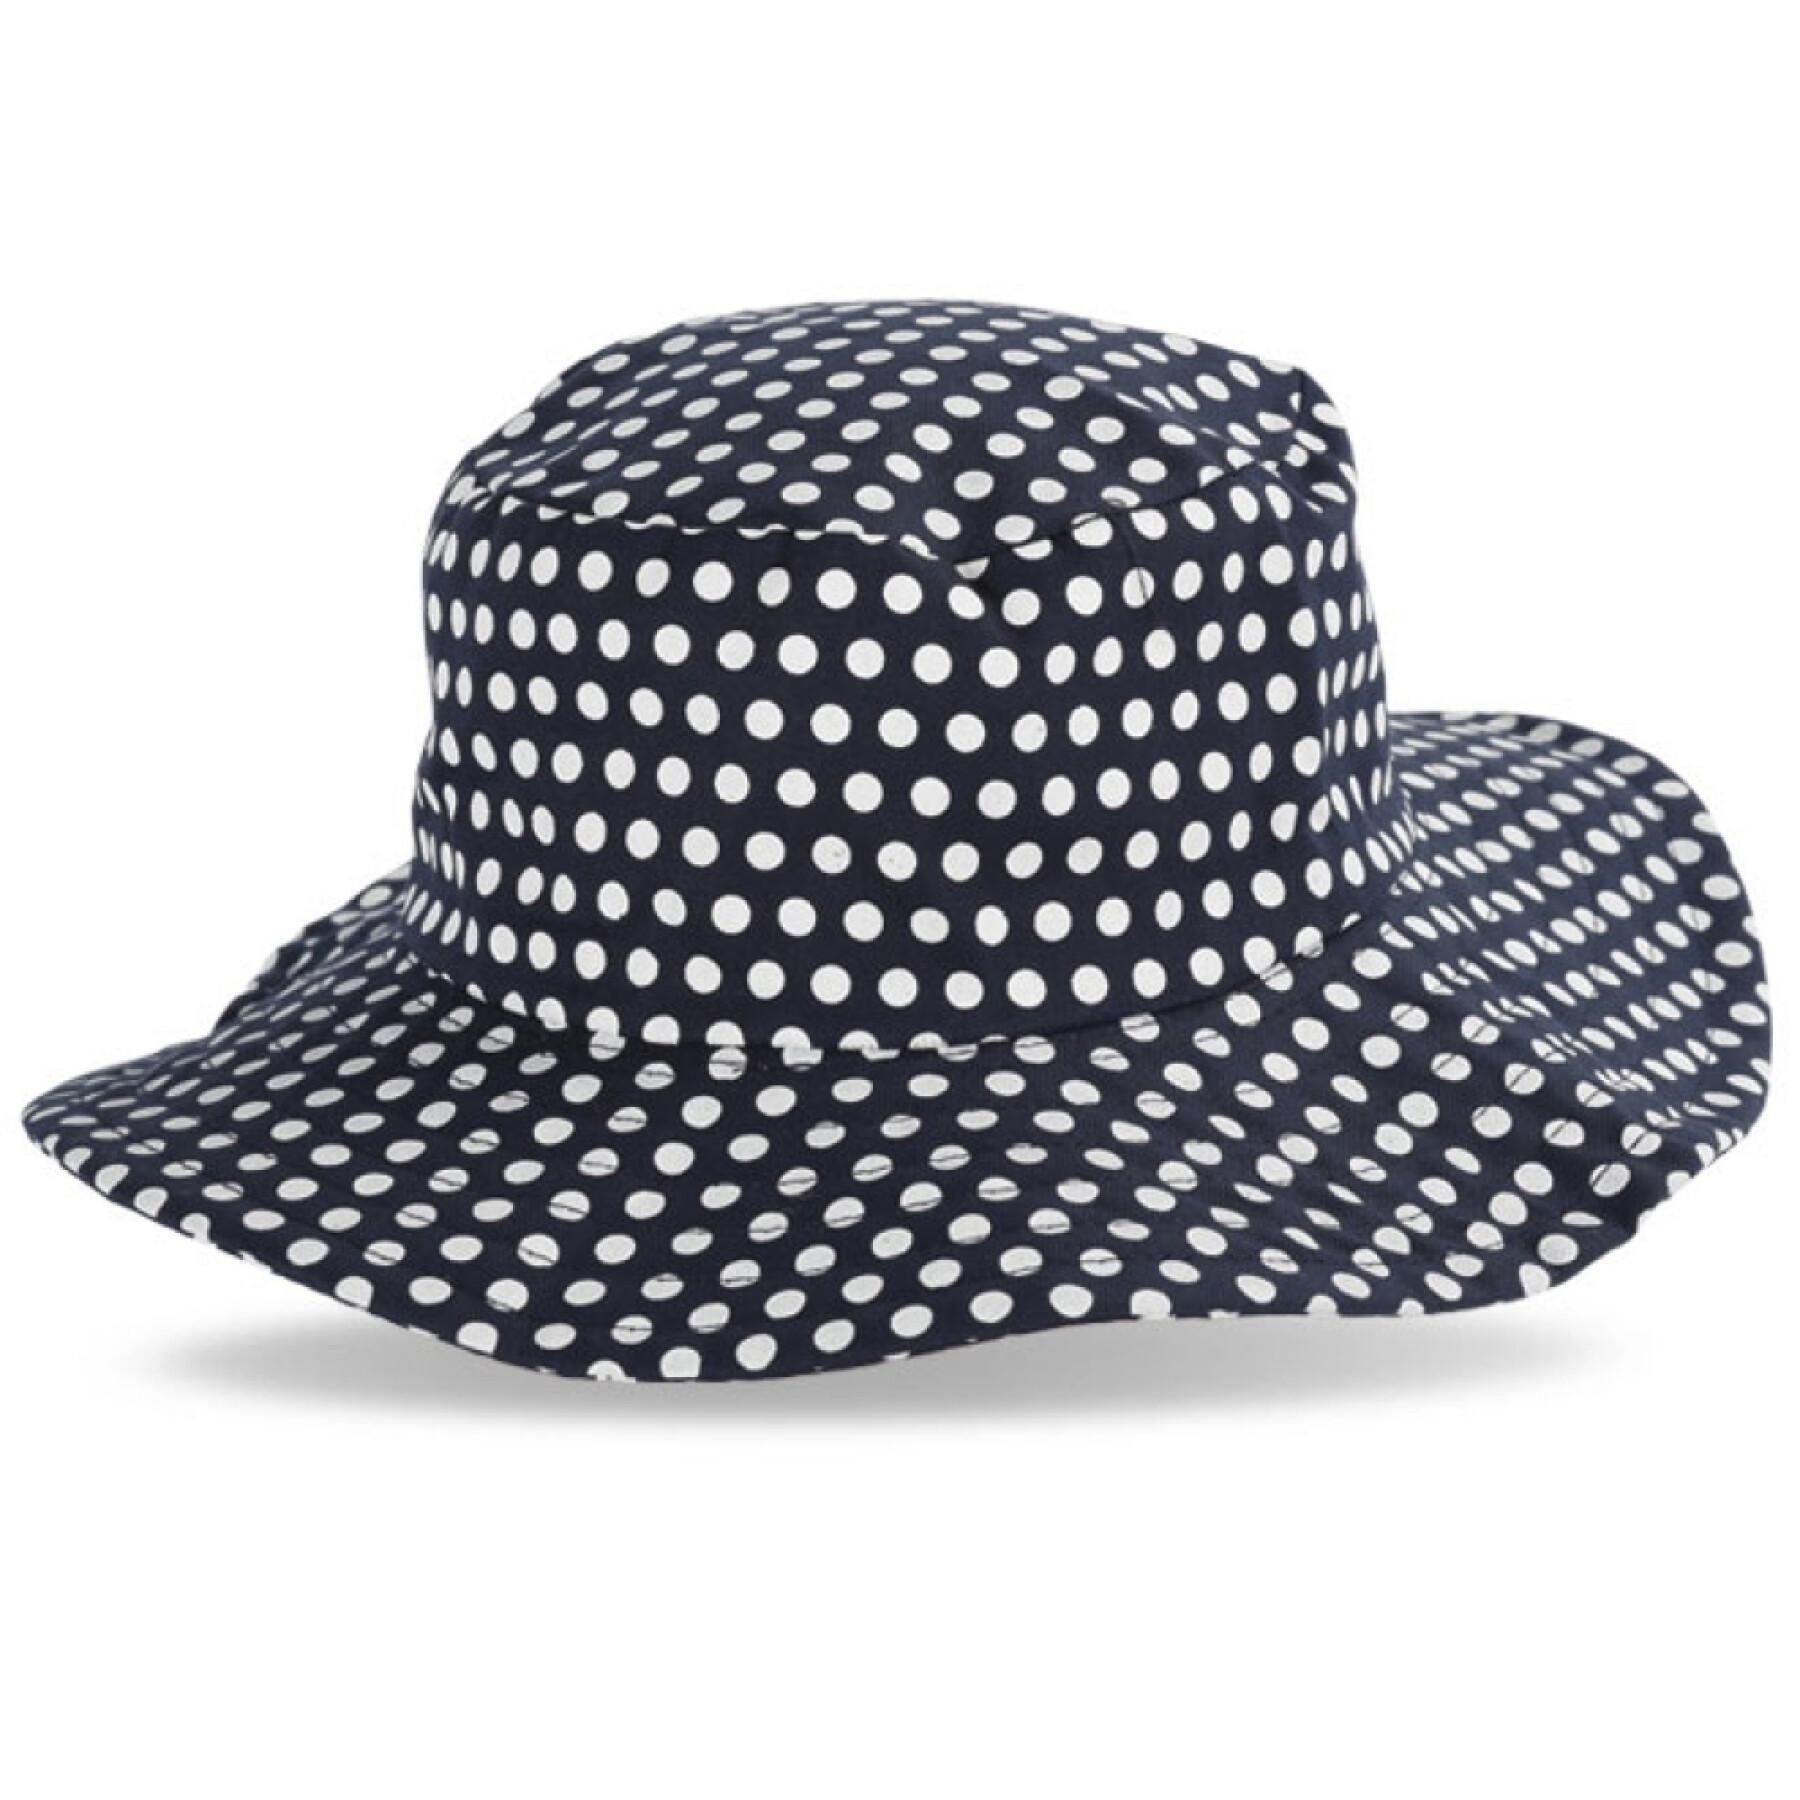 Women's polka dot hat Solid